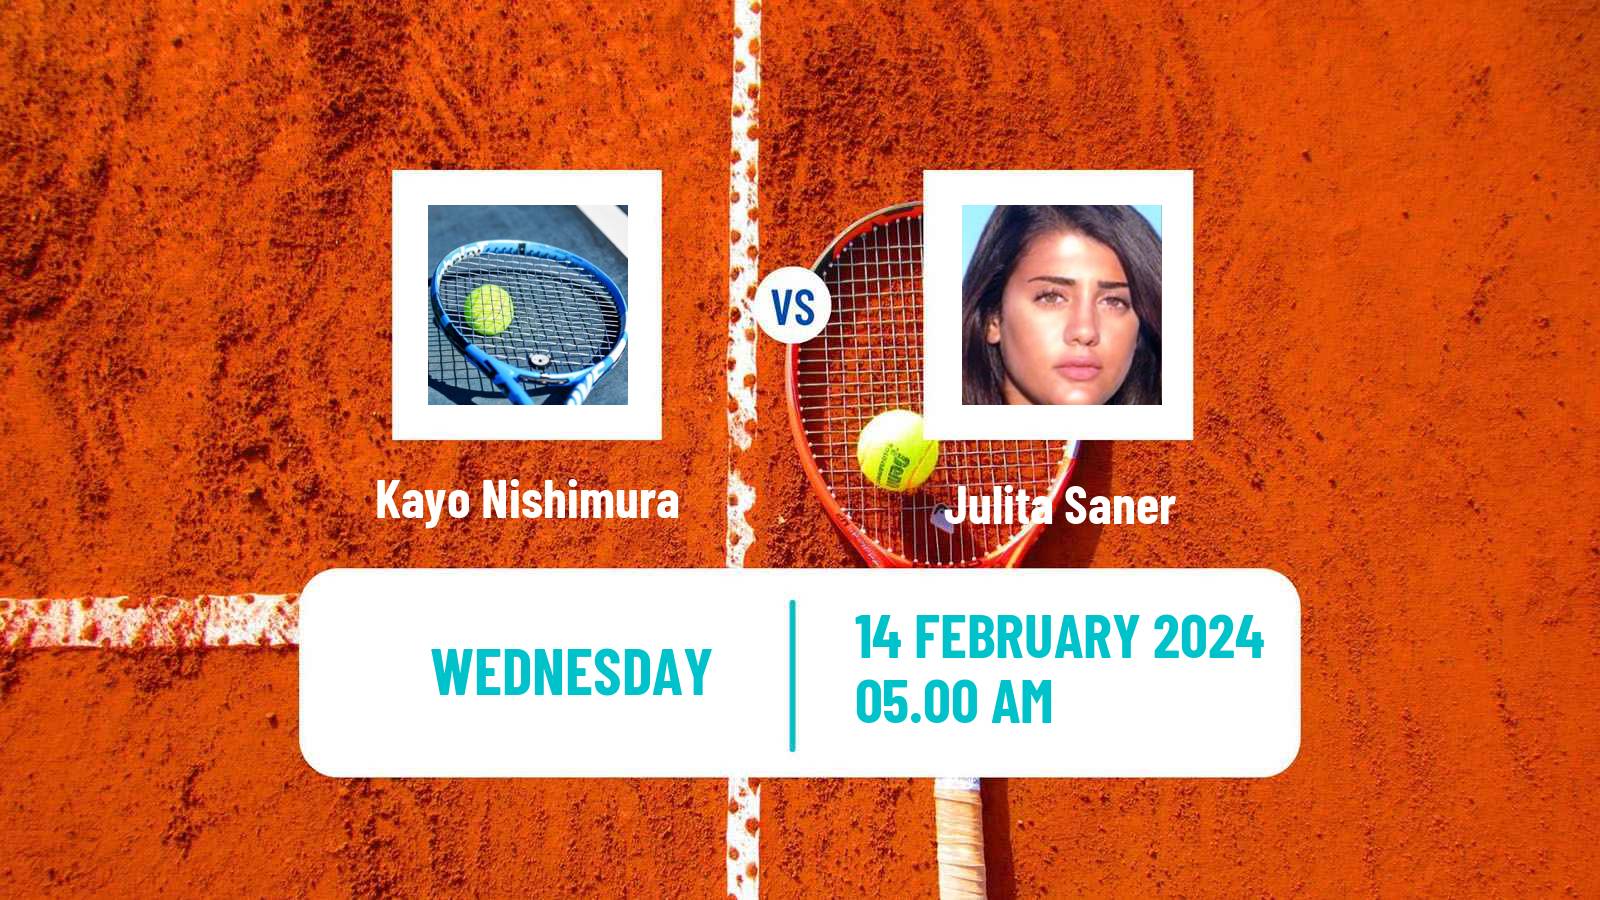 Tennis ITF W15 Monastir 5 Women Kayo Nishimura - Julita Saner